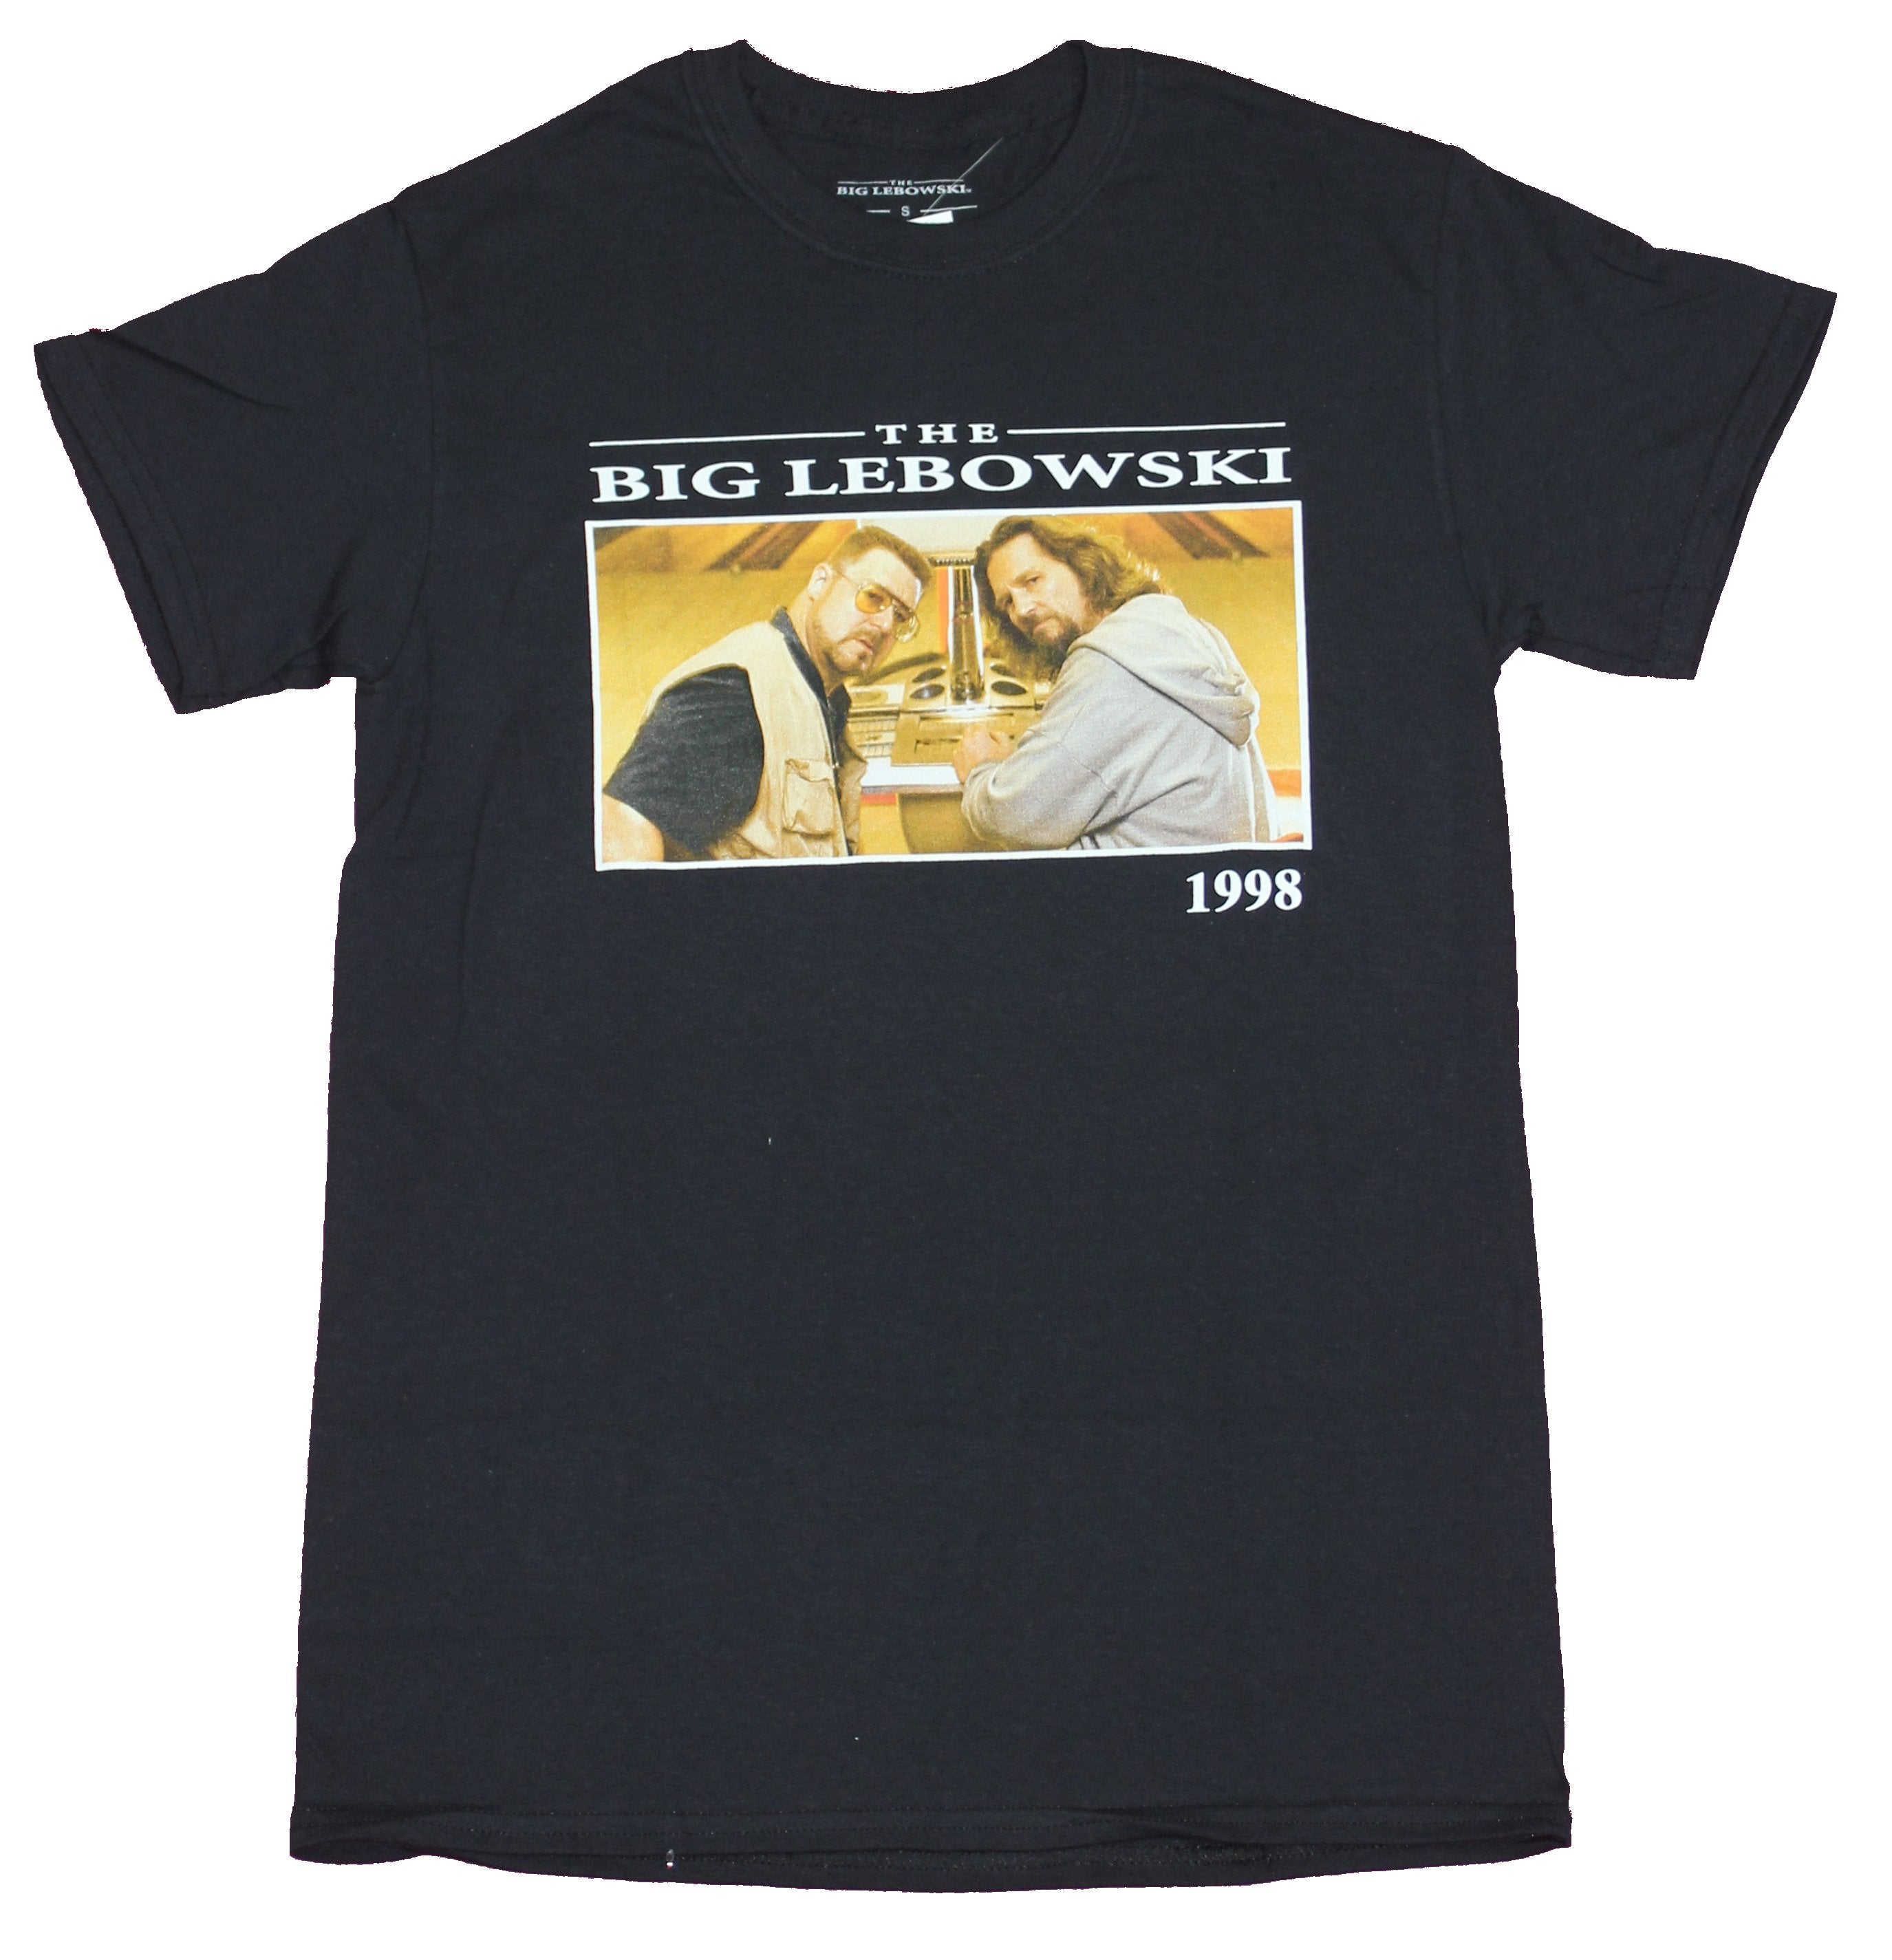 The Big Lebowski Mens T-Shirt - The Dude and Walter 1998